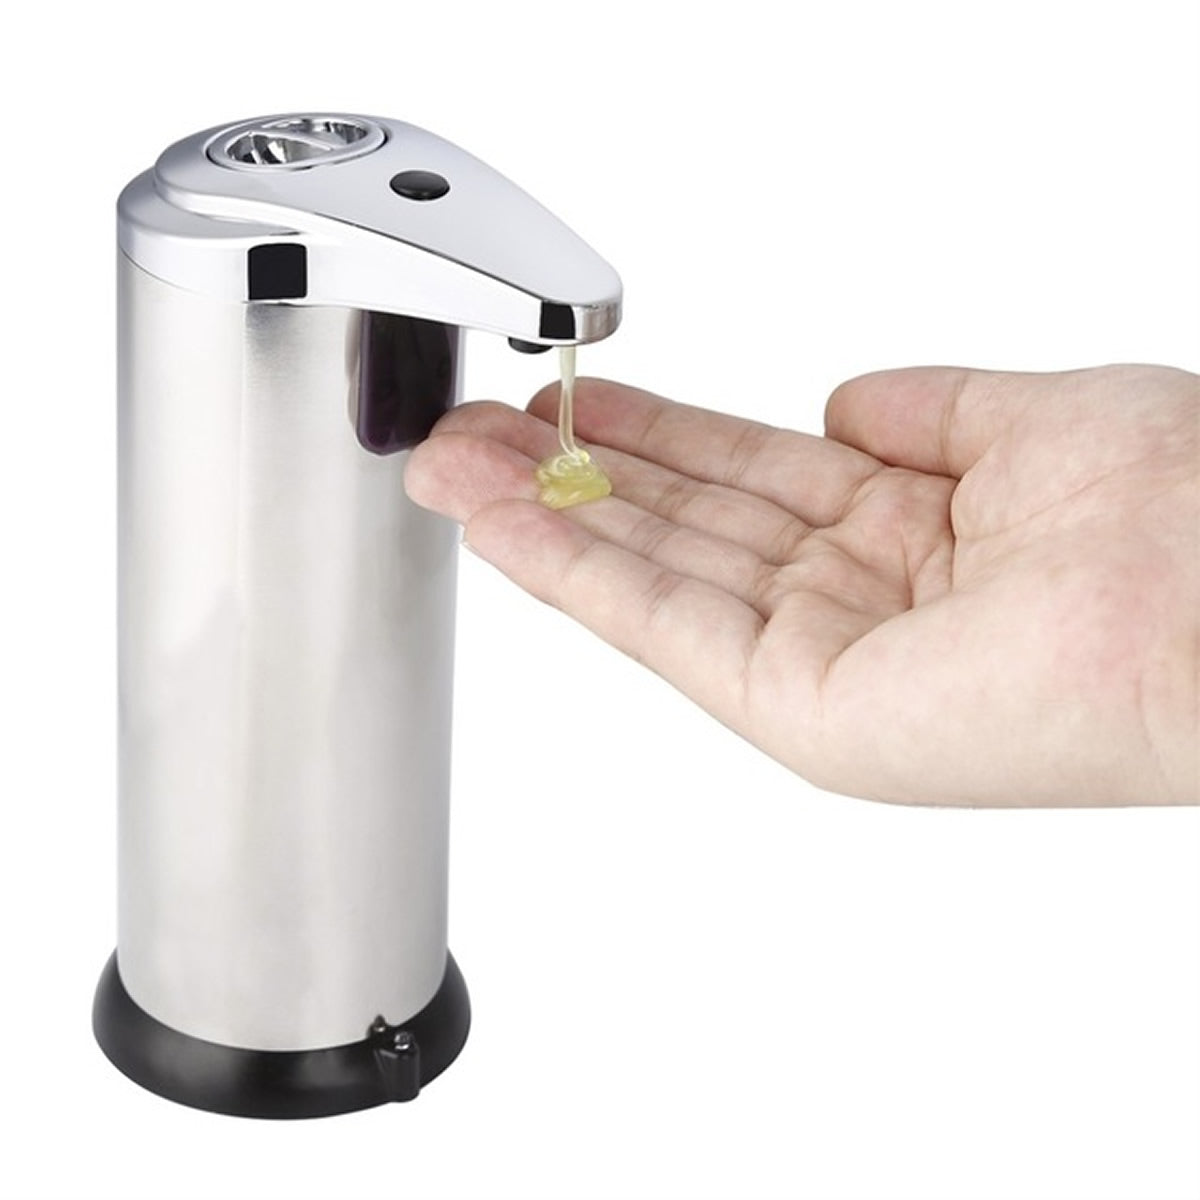  CareAll Auto Motion Smart Soap Dispenser Touch Less No Mess by VistaShops VistaShops Perfumarie